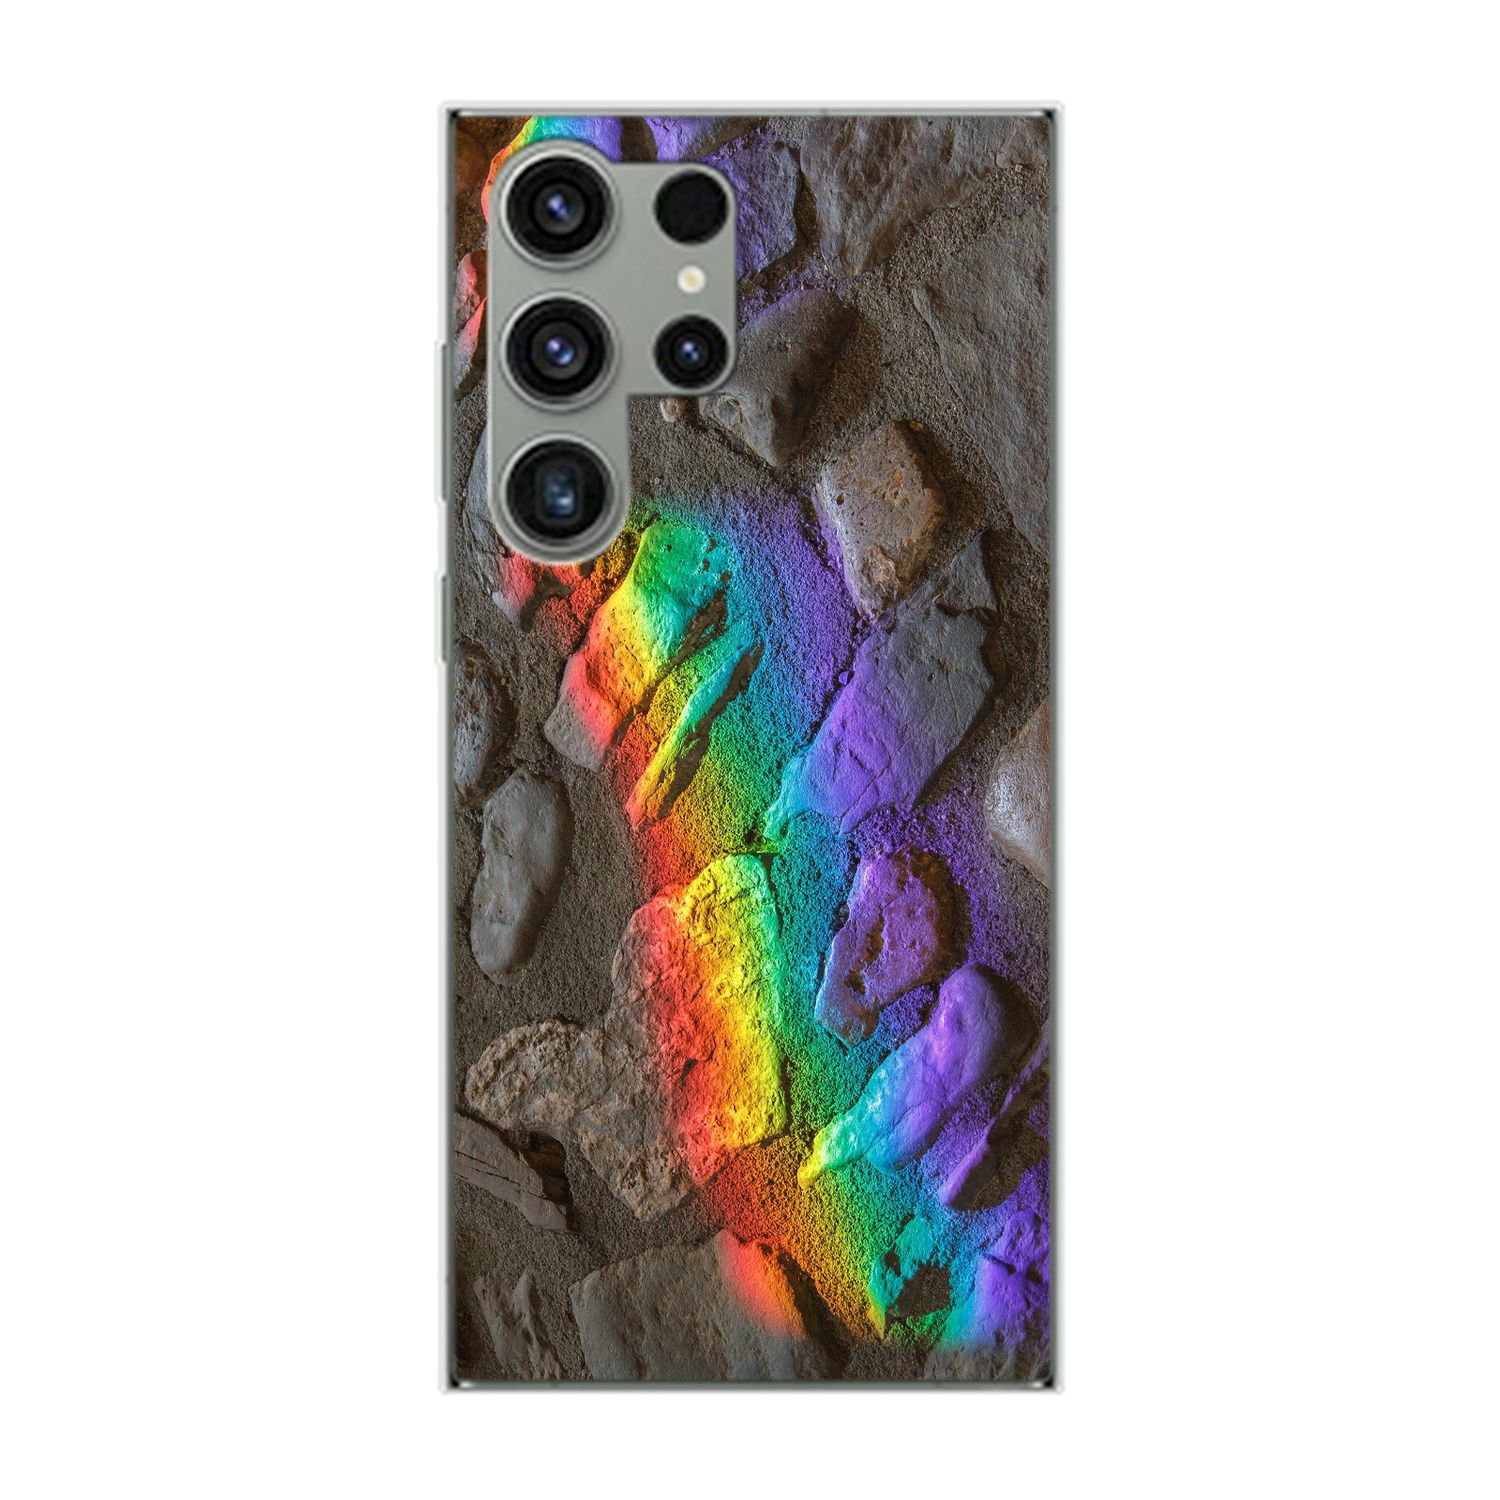 Regenbogen S23 Backcover, Steine Ultra, KÖNIG DESIGN Samsung, Galaxy Case,